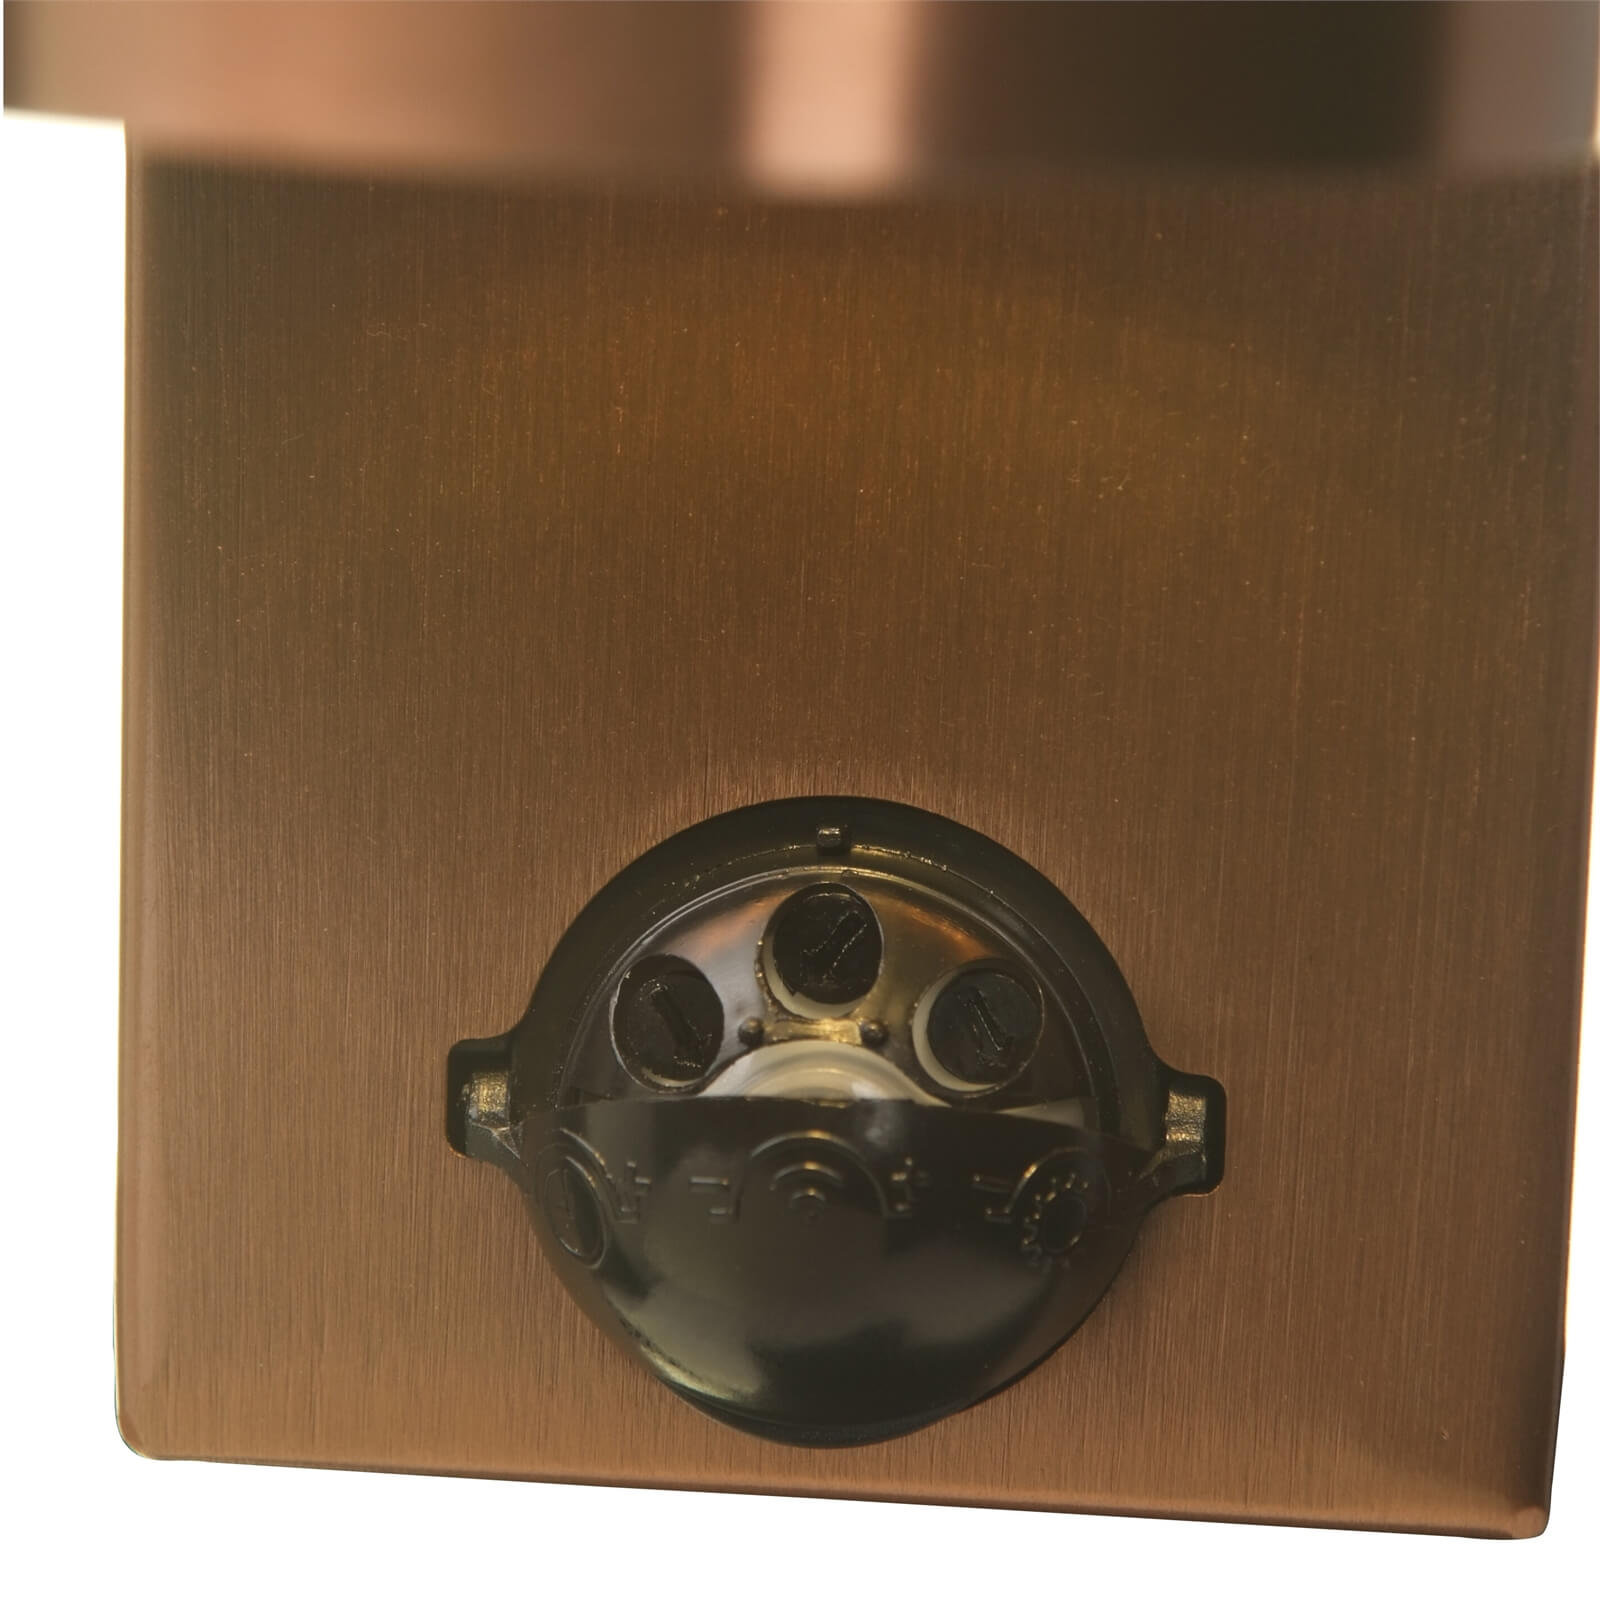 Lutec Rado Up & Down Outdoor Wall Light with PIR Motion Sensor - Copper